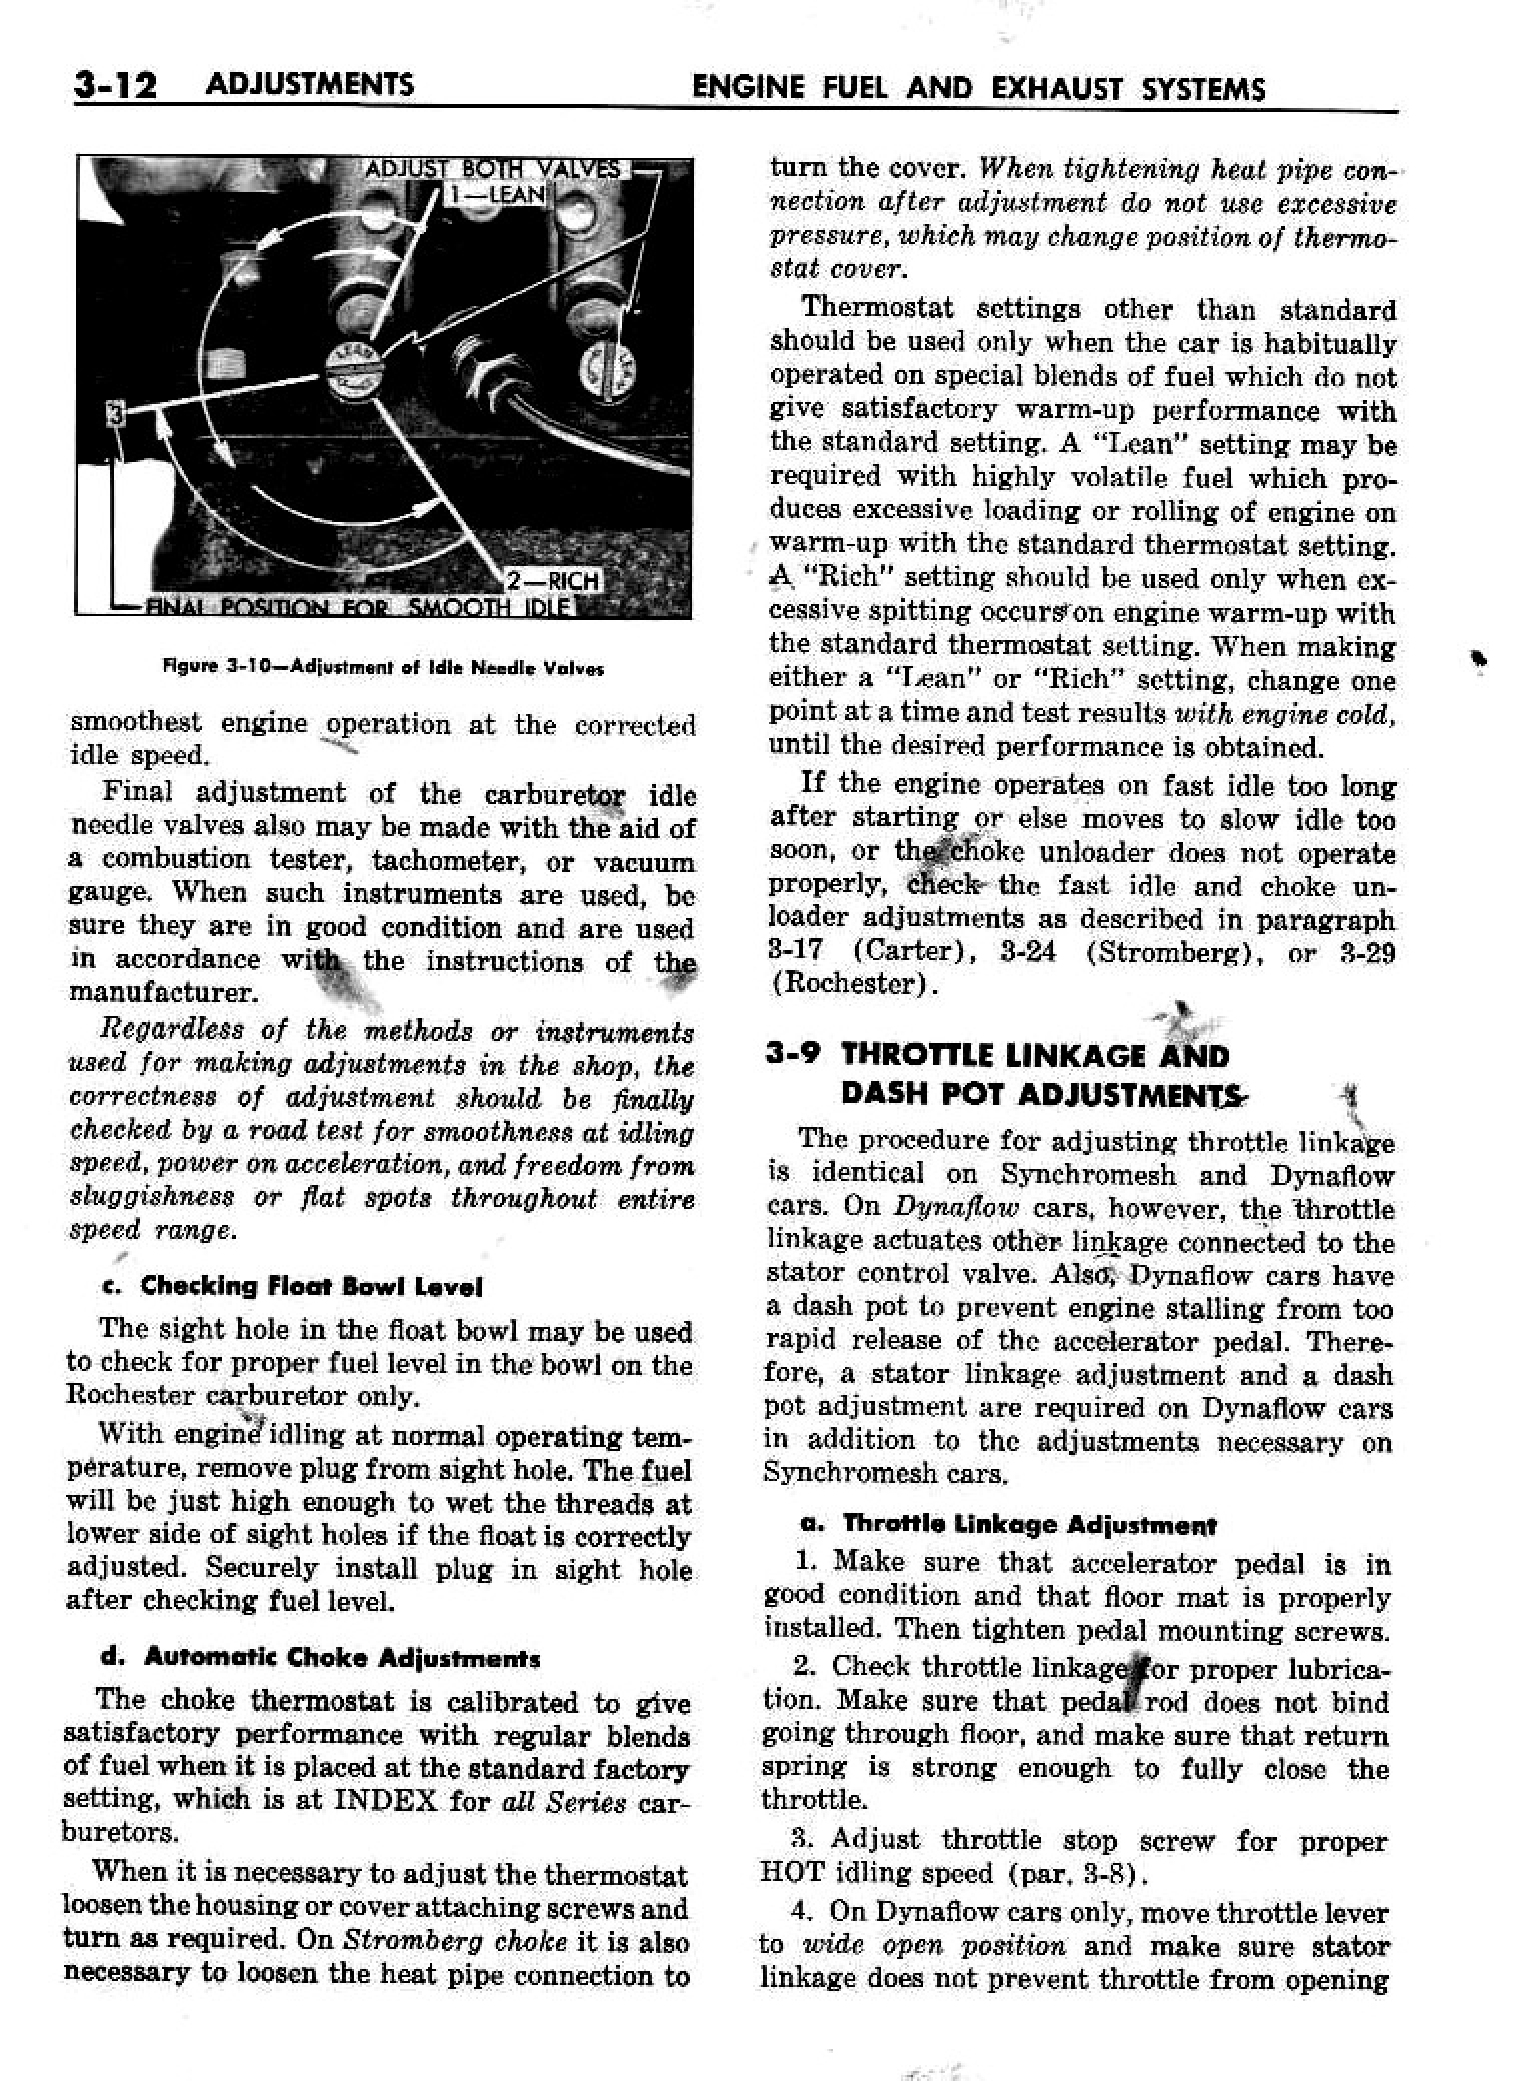 n_04 1958 Buick Shop Manual - Engine Fuel & Exhaust_12.jpg